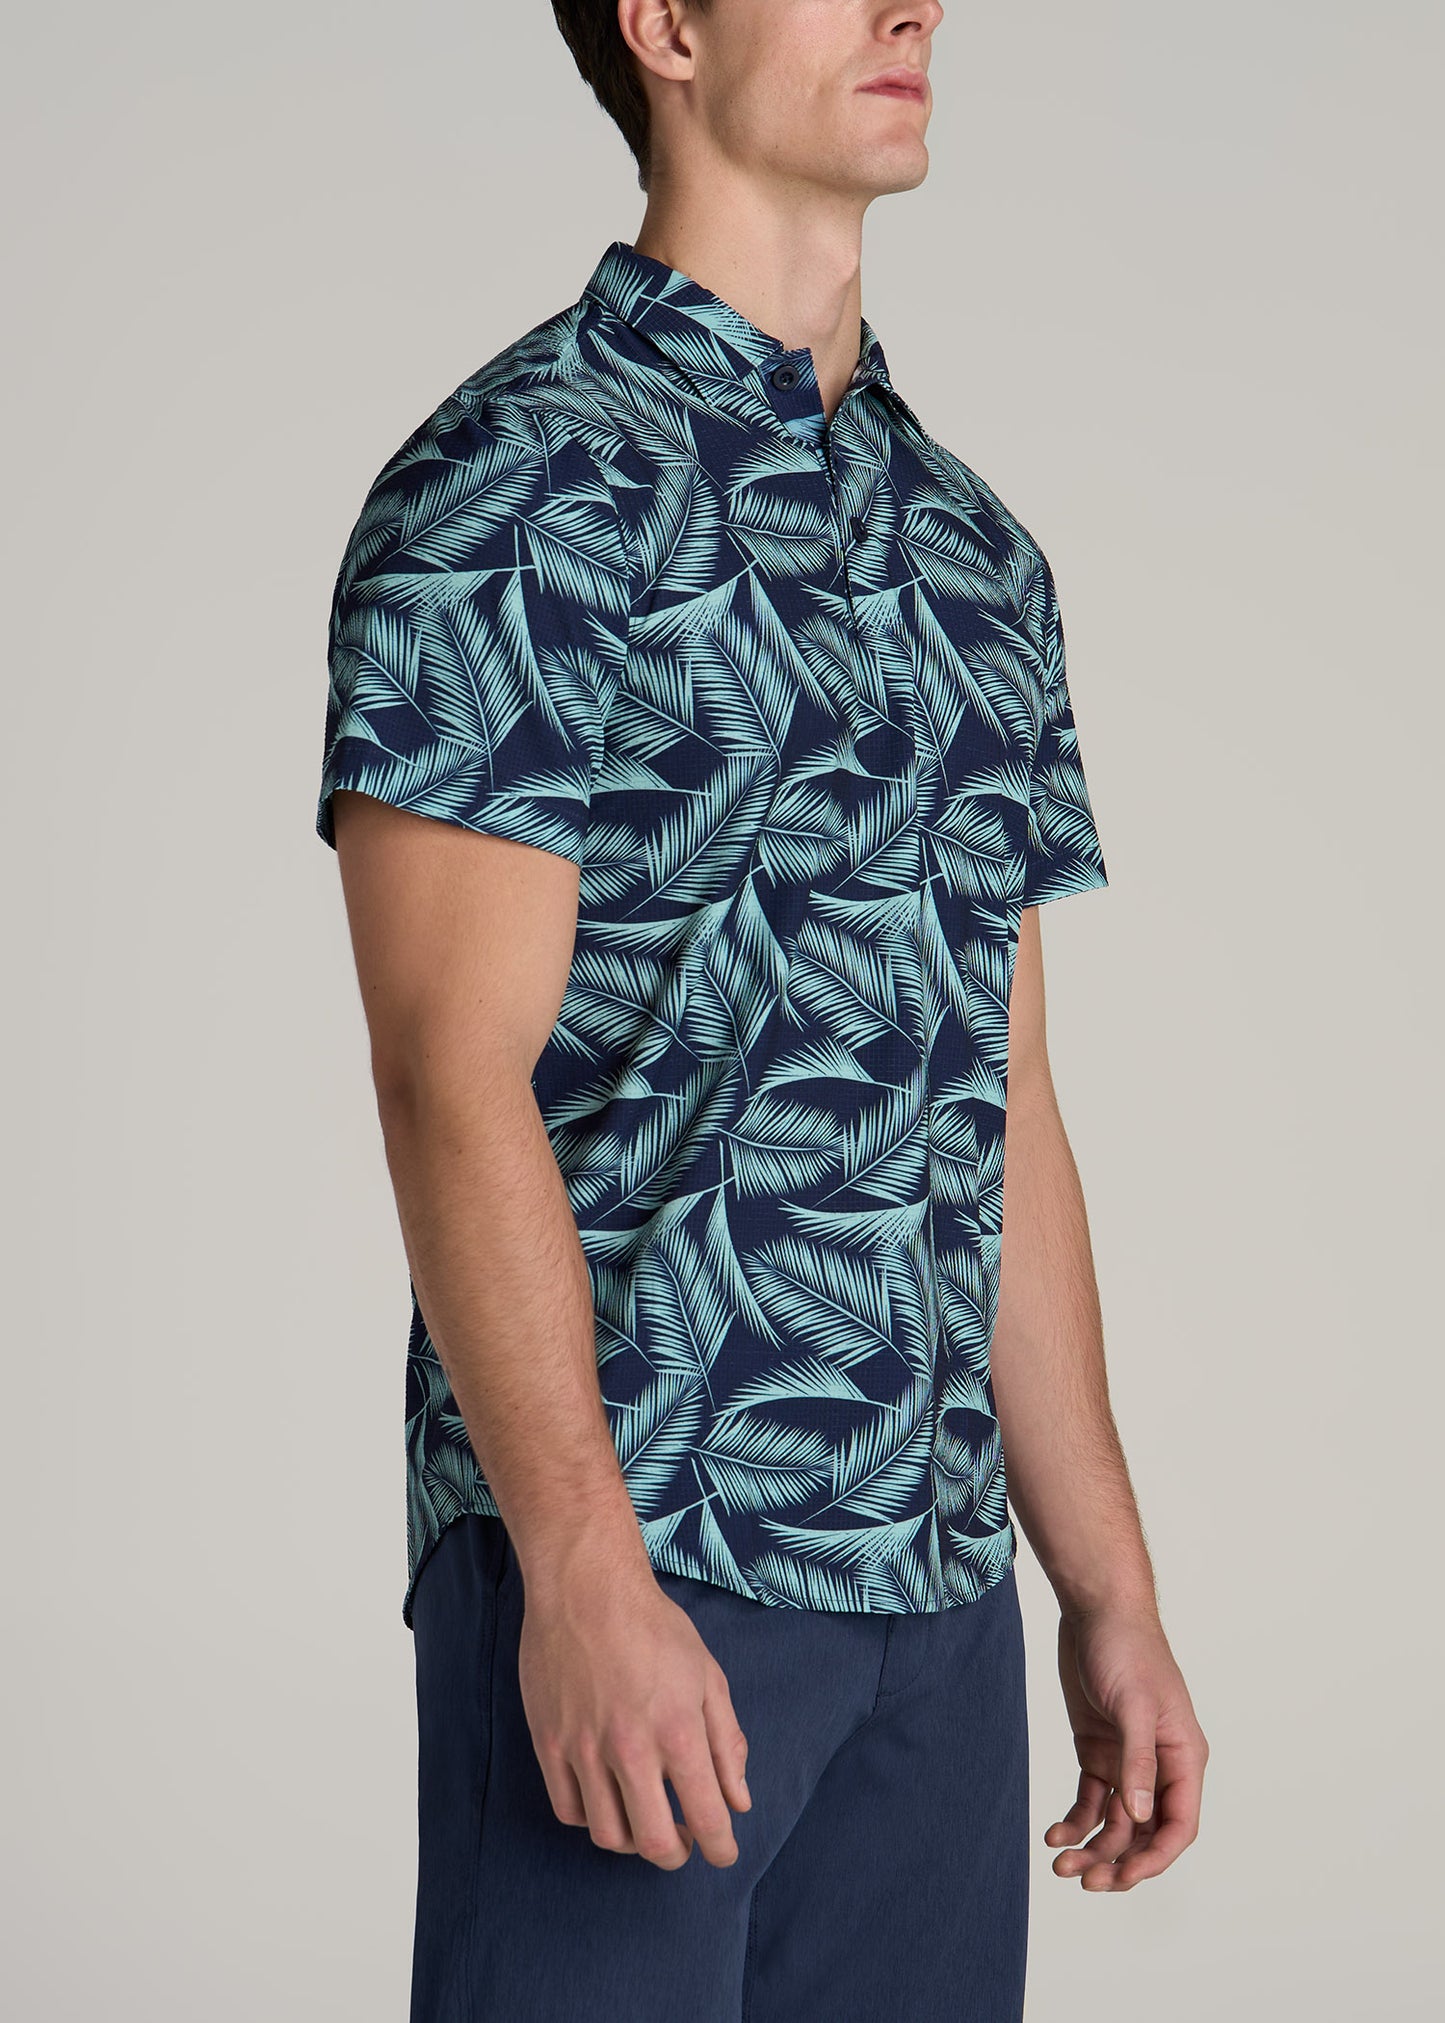 Coastal Perforated Tall Men's Polo Shirt in Navy and Aqua Palms